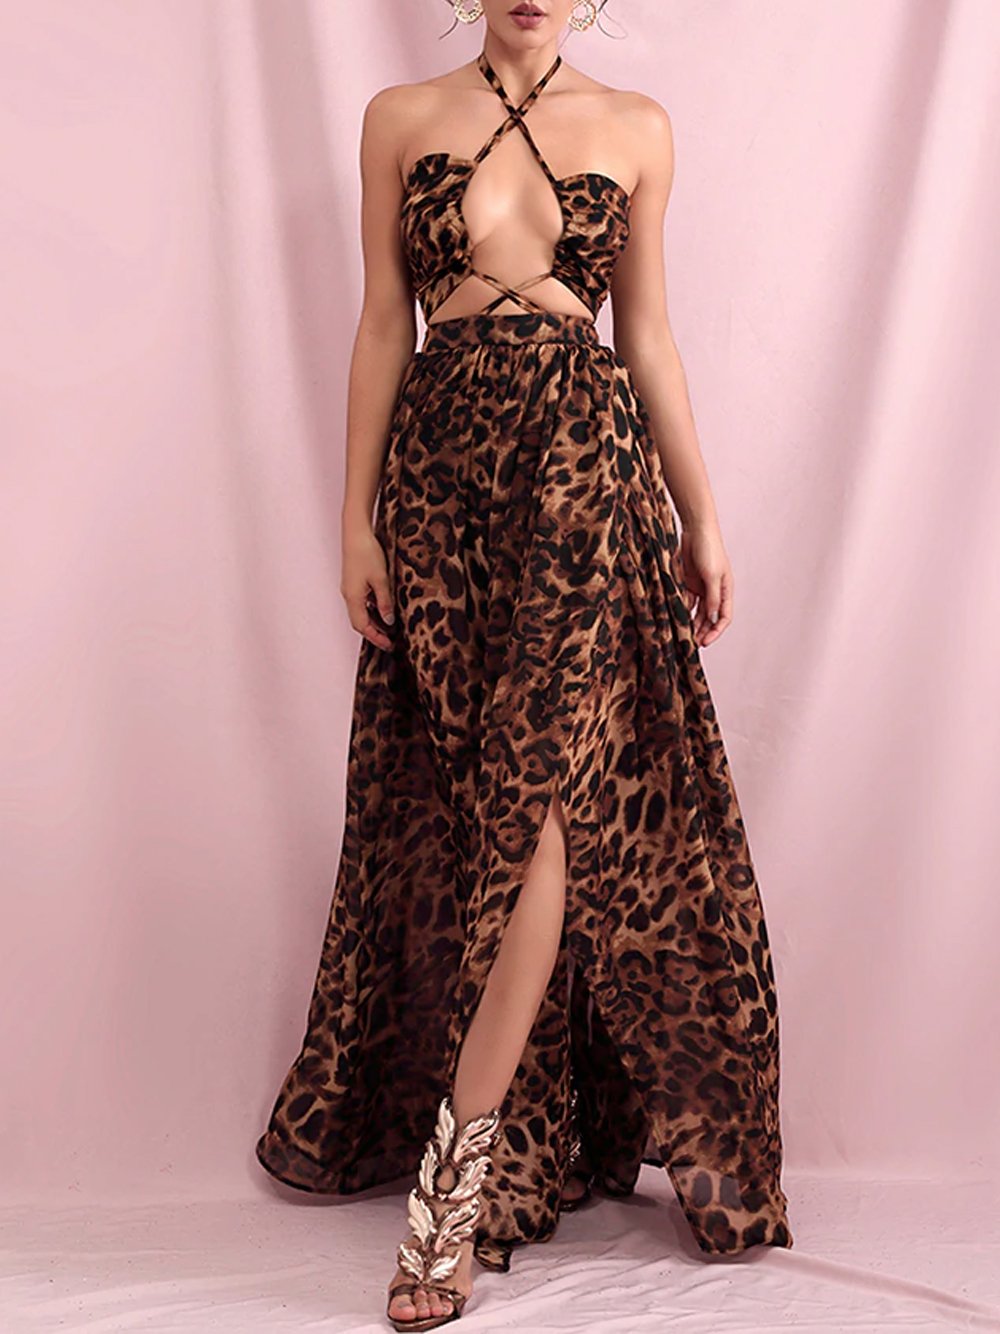 GRECCA Leopard Maxi Dress